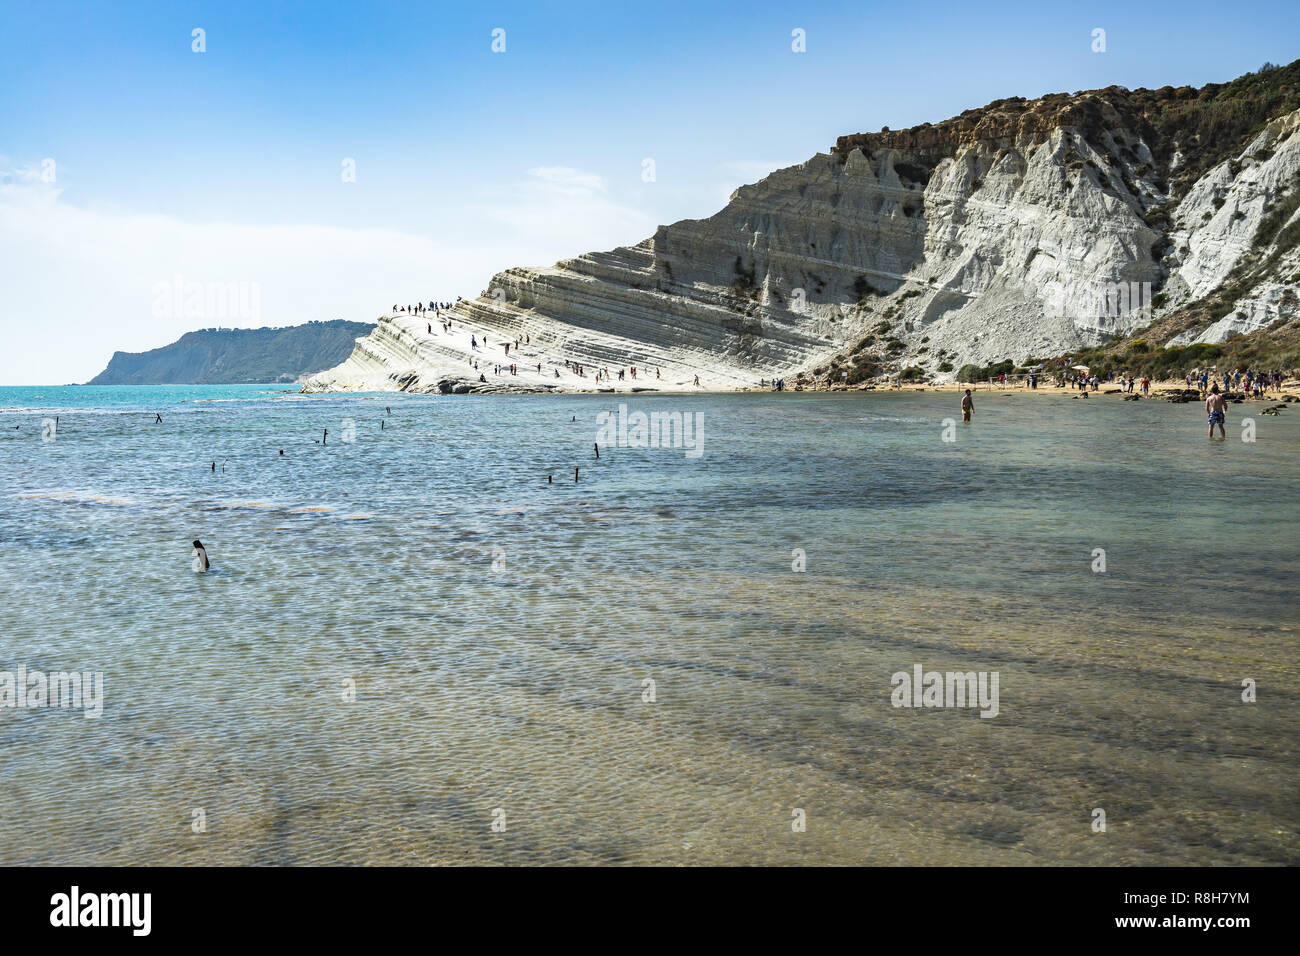 Am Strand von Scala dei Turchi, Realmonte, Provinz Agrigento, Sizilien, Italien Stockfoto